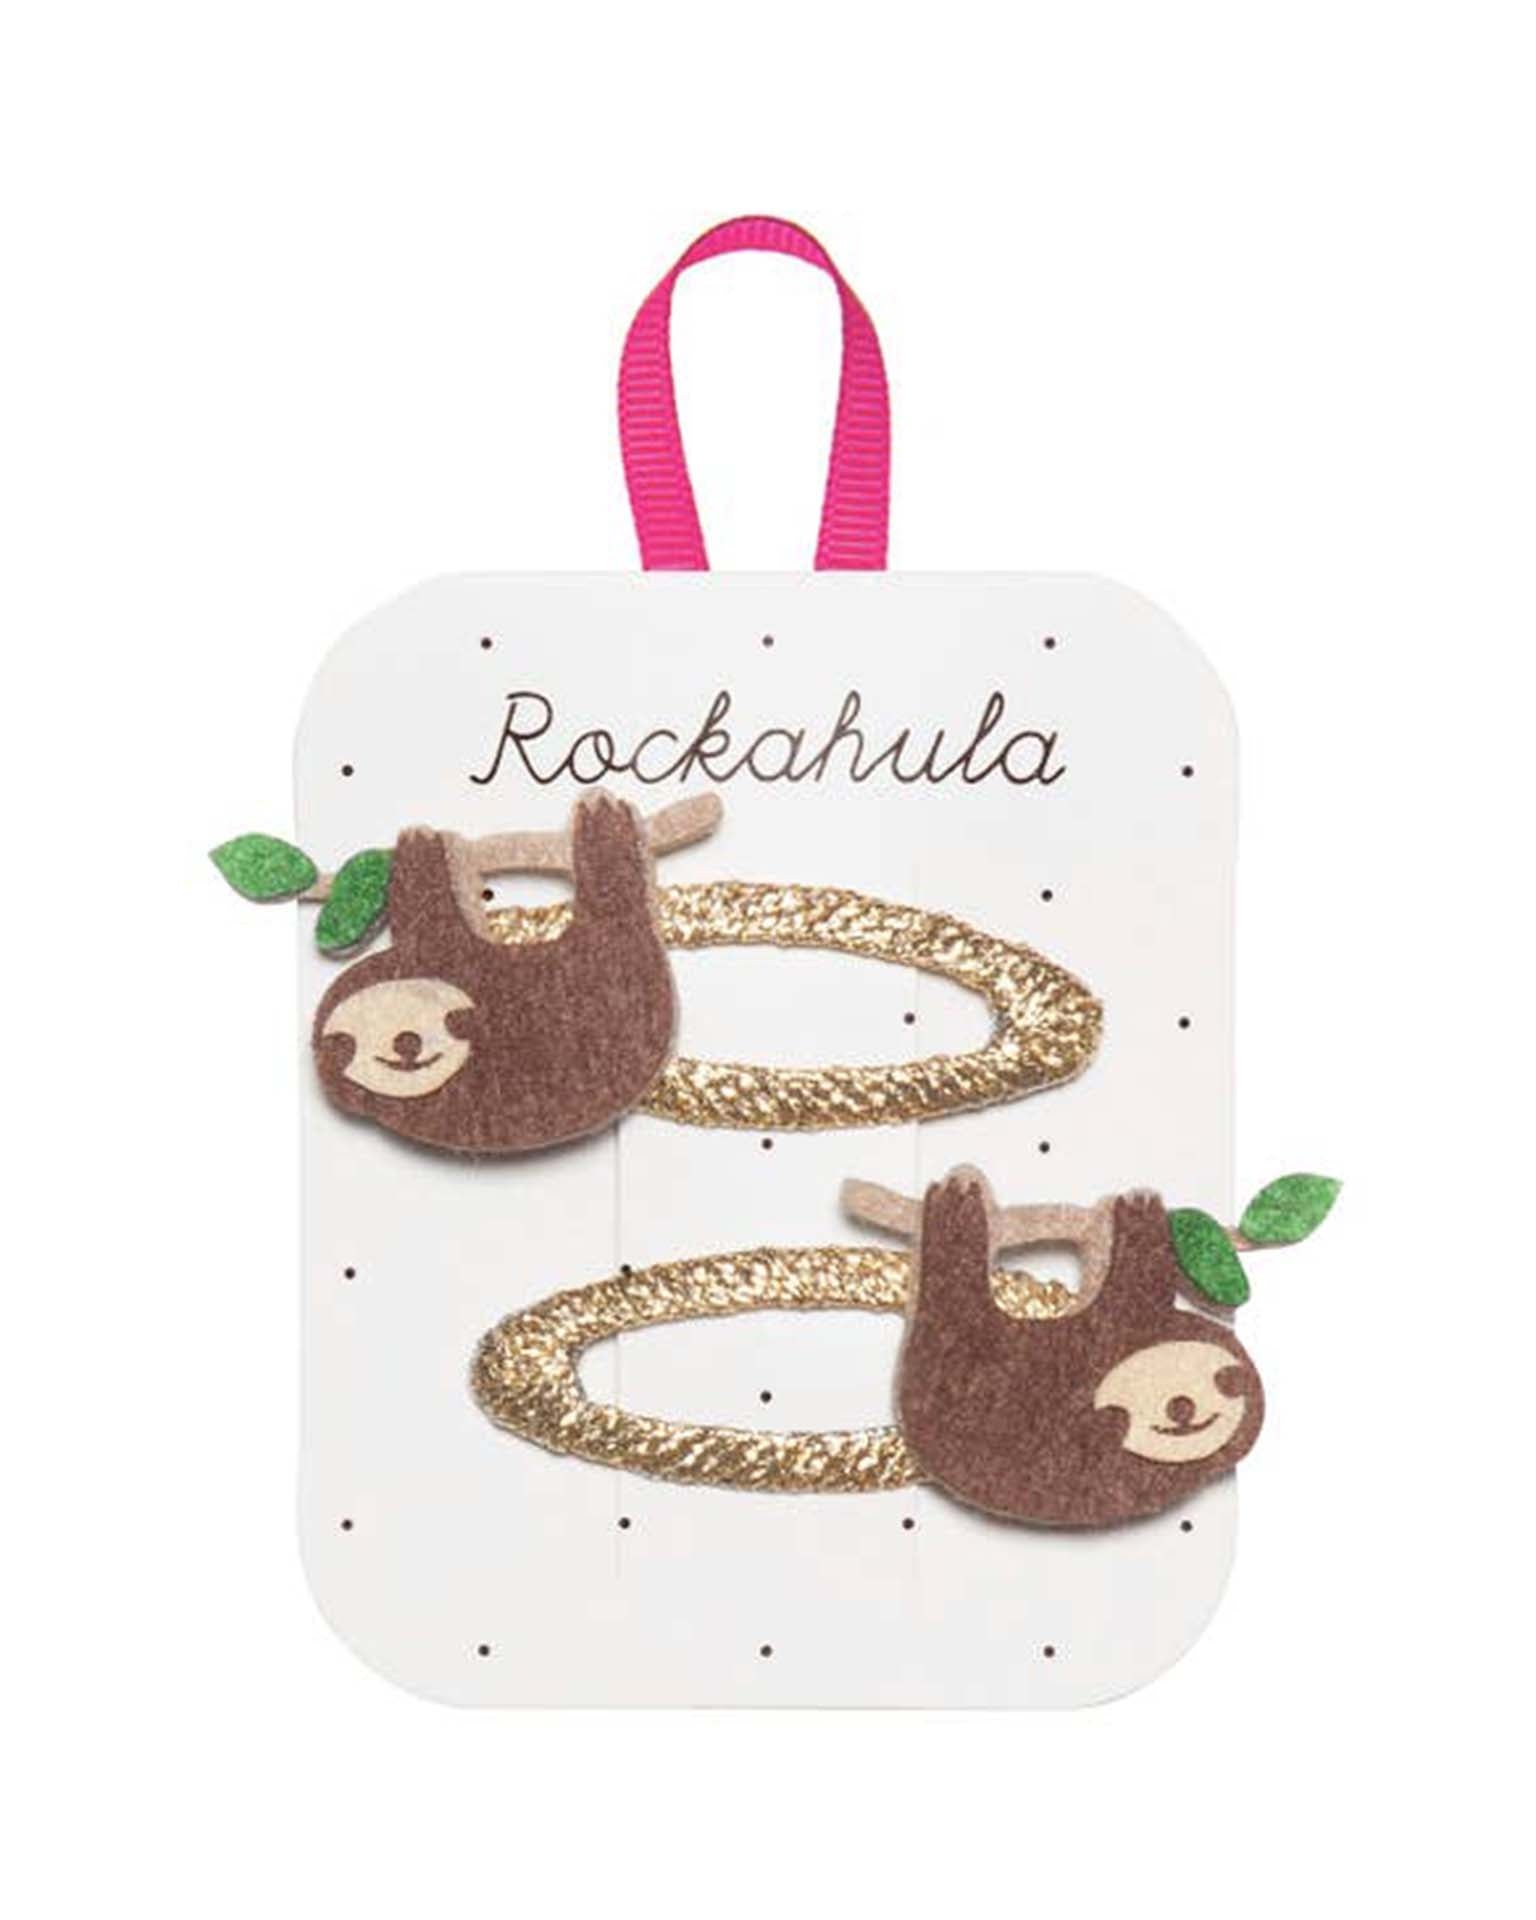 Little rockahula kids accessories sleepy sloth clips